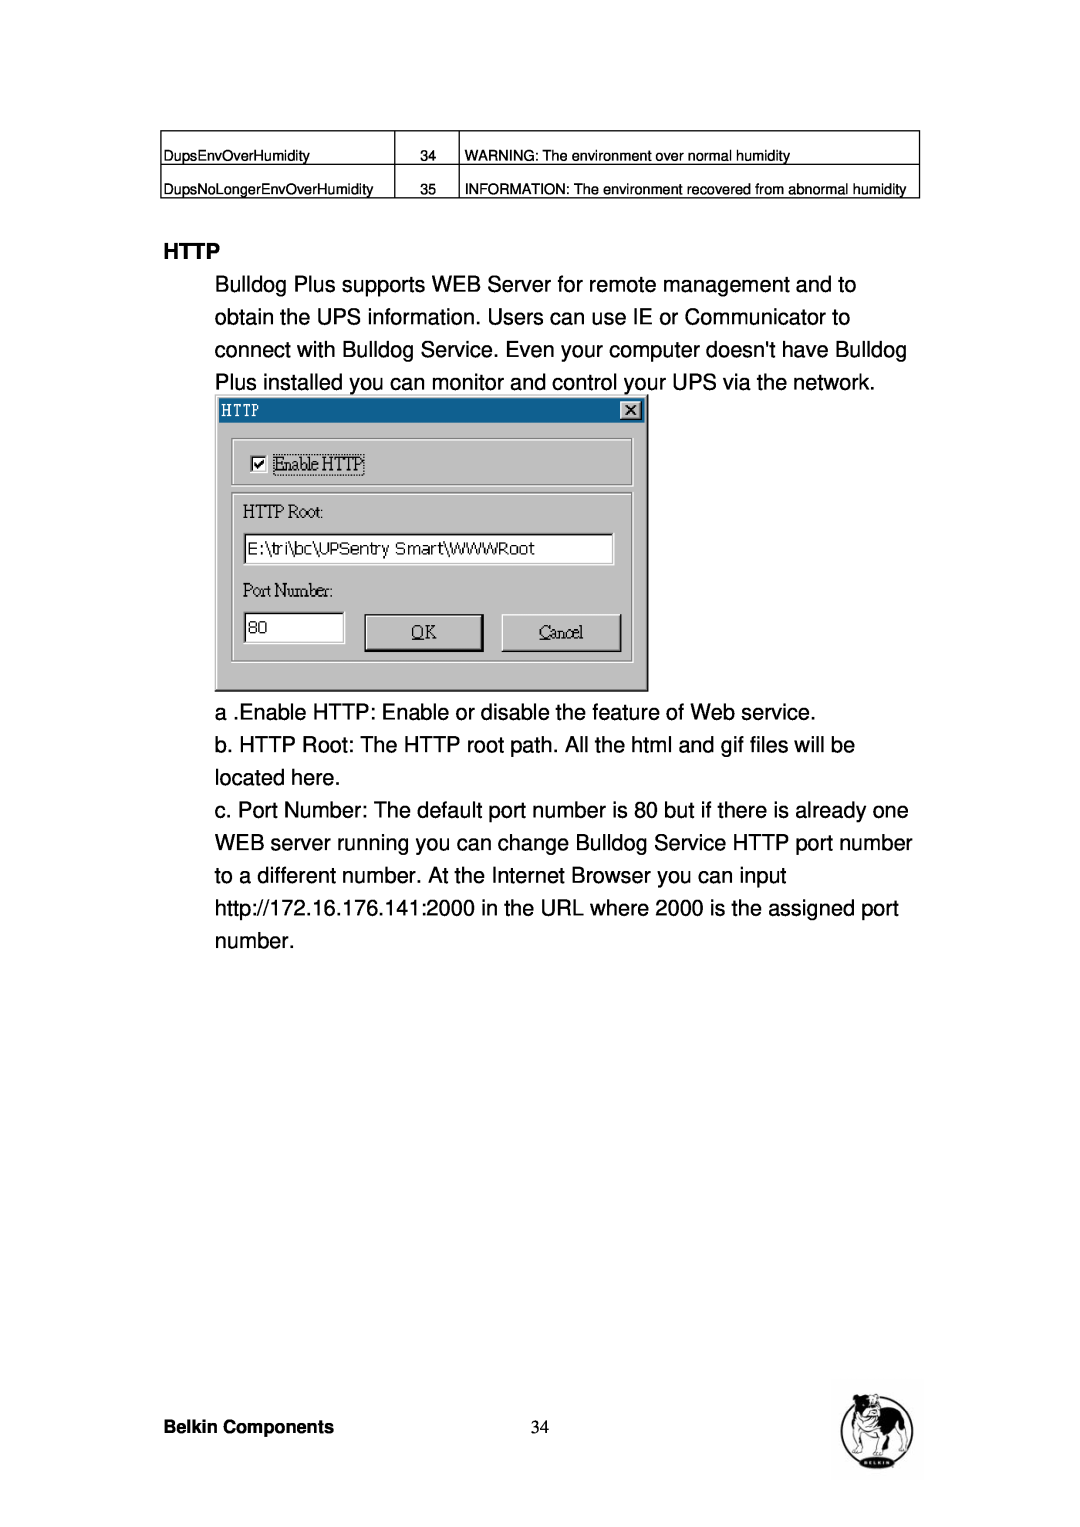 Belkin belkin bulldog plus- shutdown management software for windows user manual Http, DupsEnvOverHumidity 